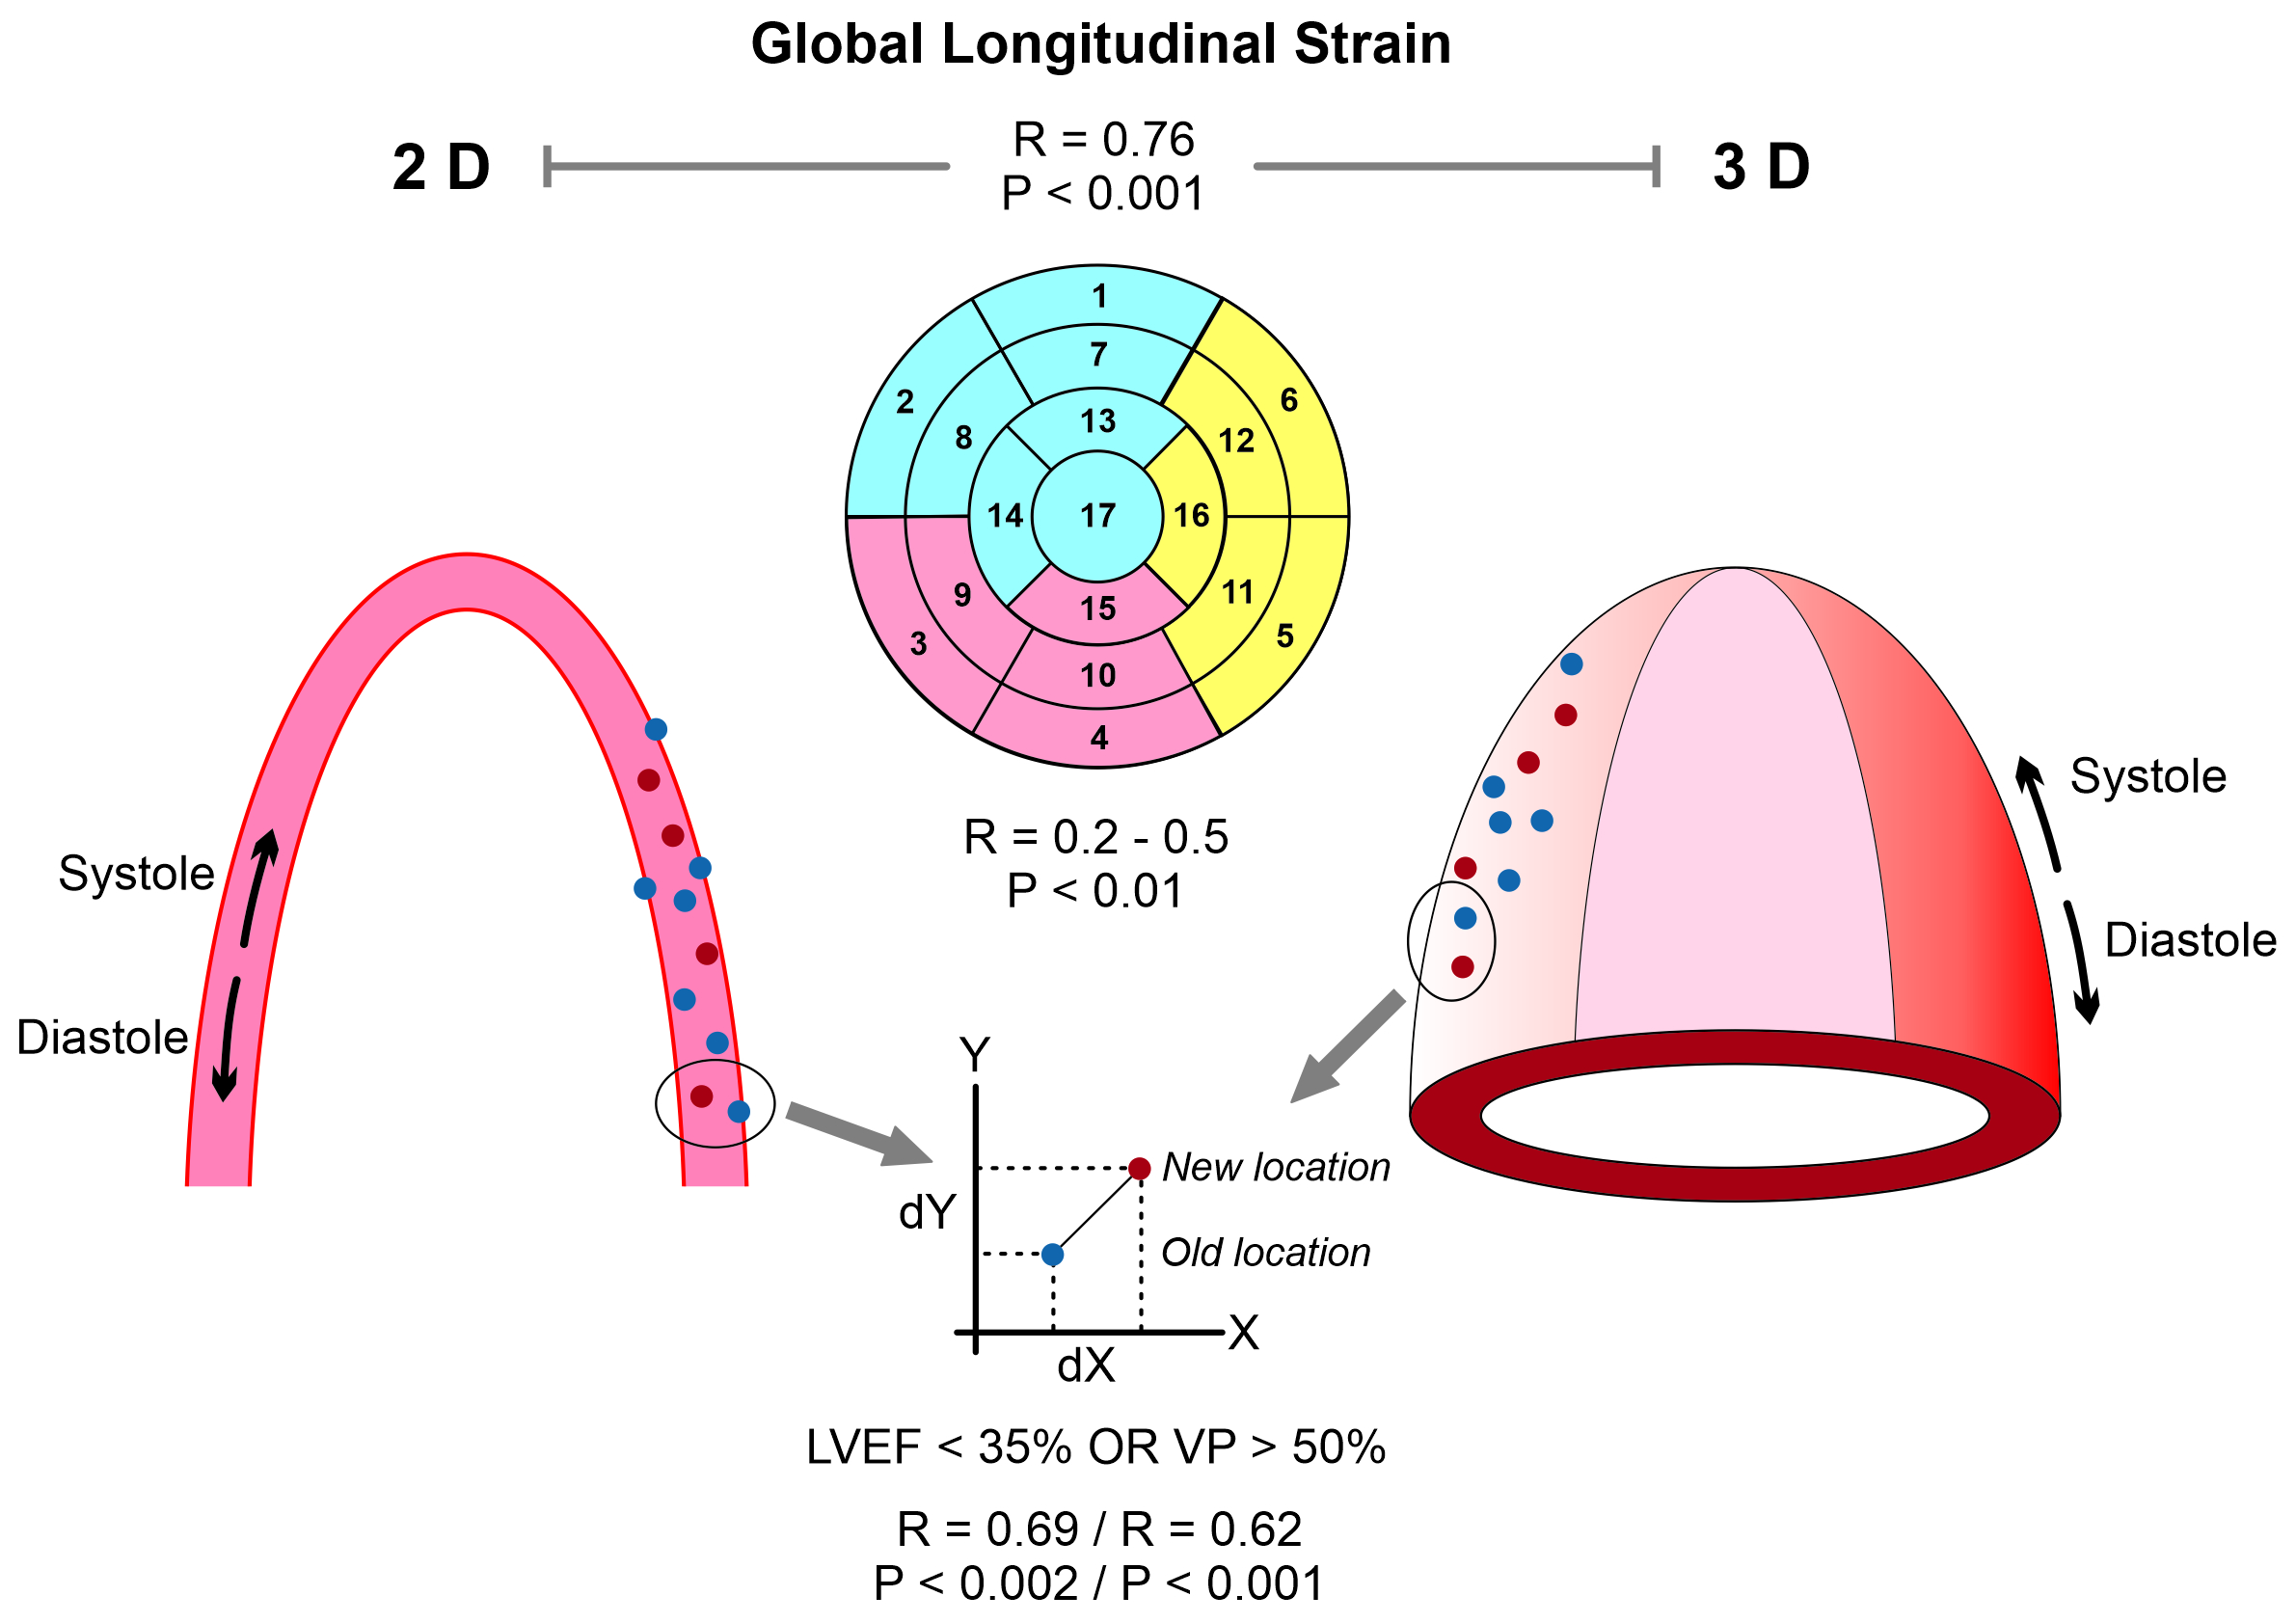 Global longitudinal strain (GLS)